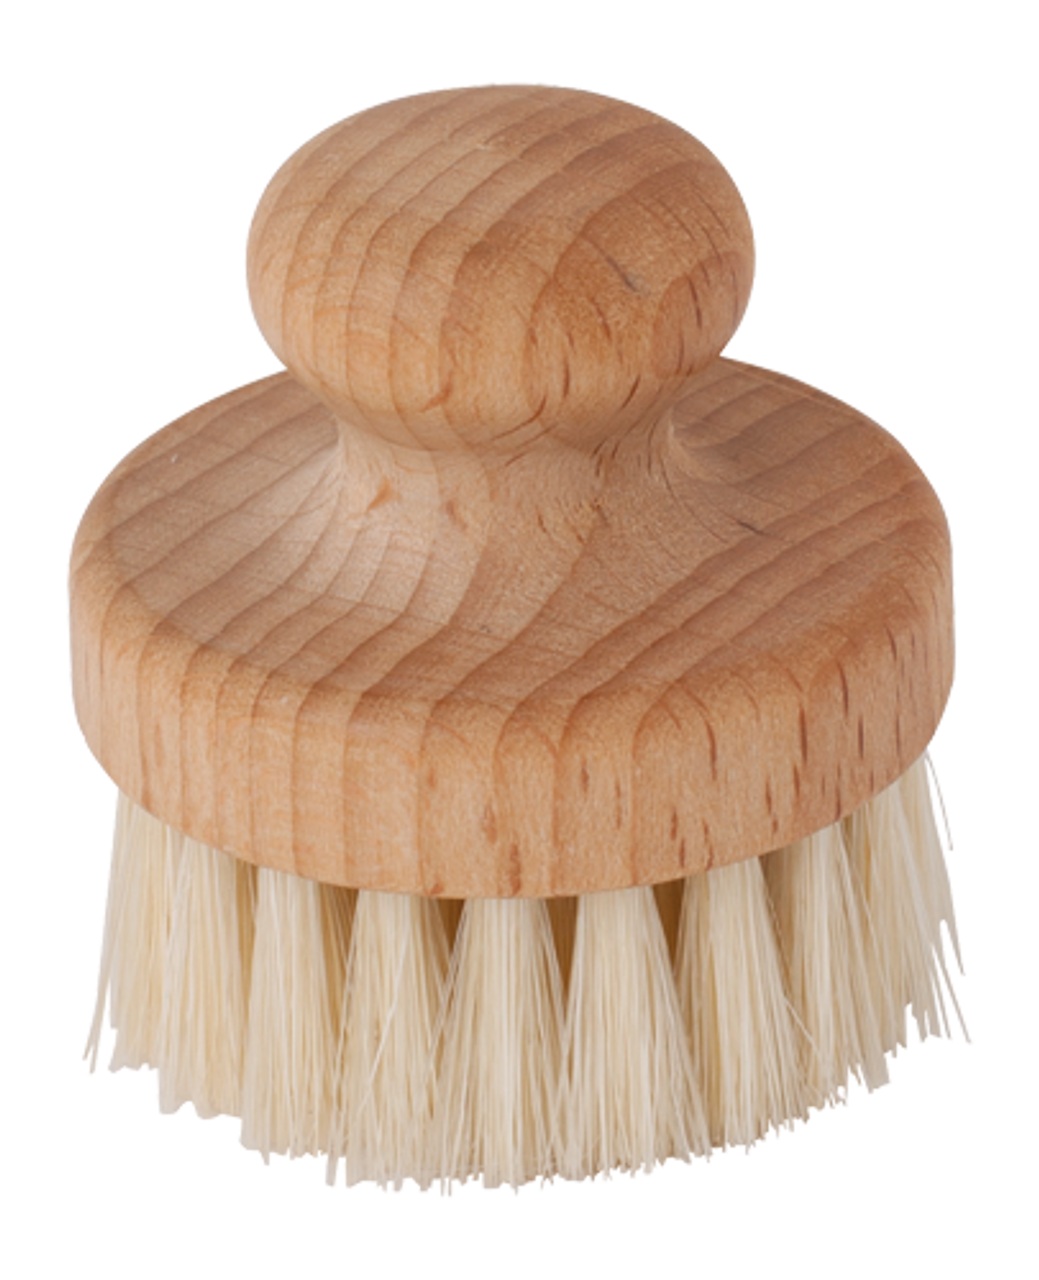 Beech Wood Mushroom Brush with Handle - THE BEACH PLUM COMPANY